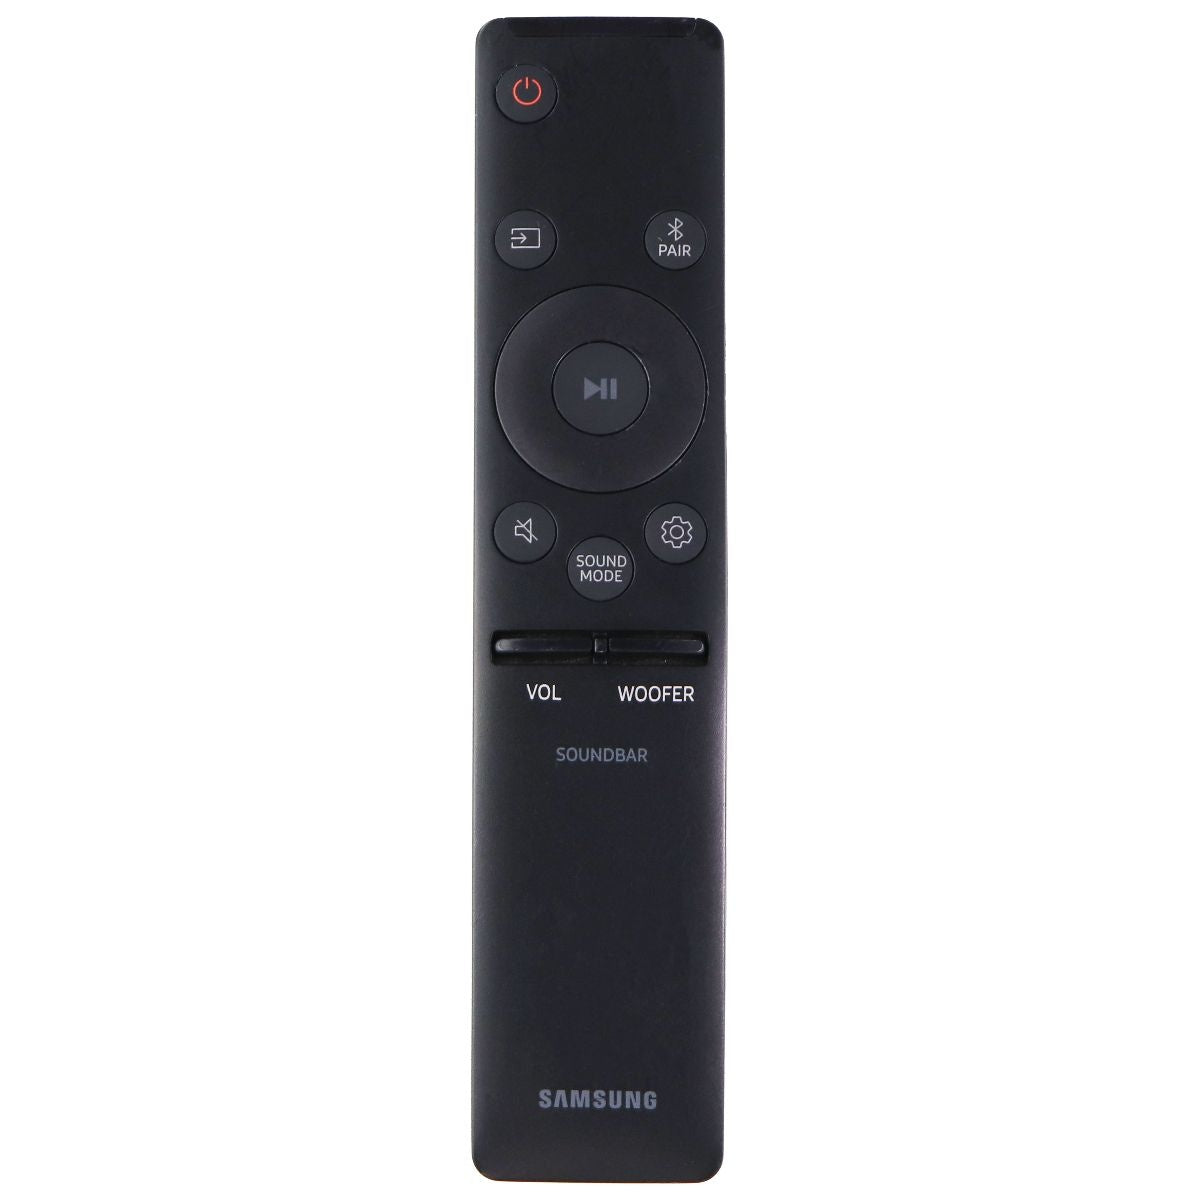 Samsung Remote Control (AH59-02767A) for Select Samsung Soundbars - Black TV, Video & Audio Accessories - Remote Controls Samsung    - Simple Cell Bulk Wholesale Pricing - USA Seller